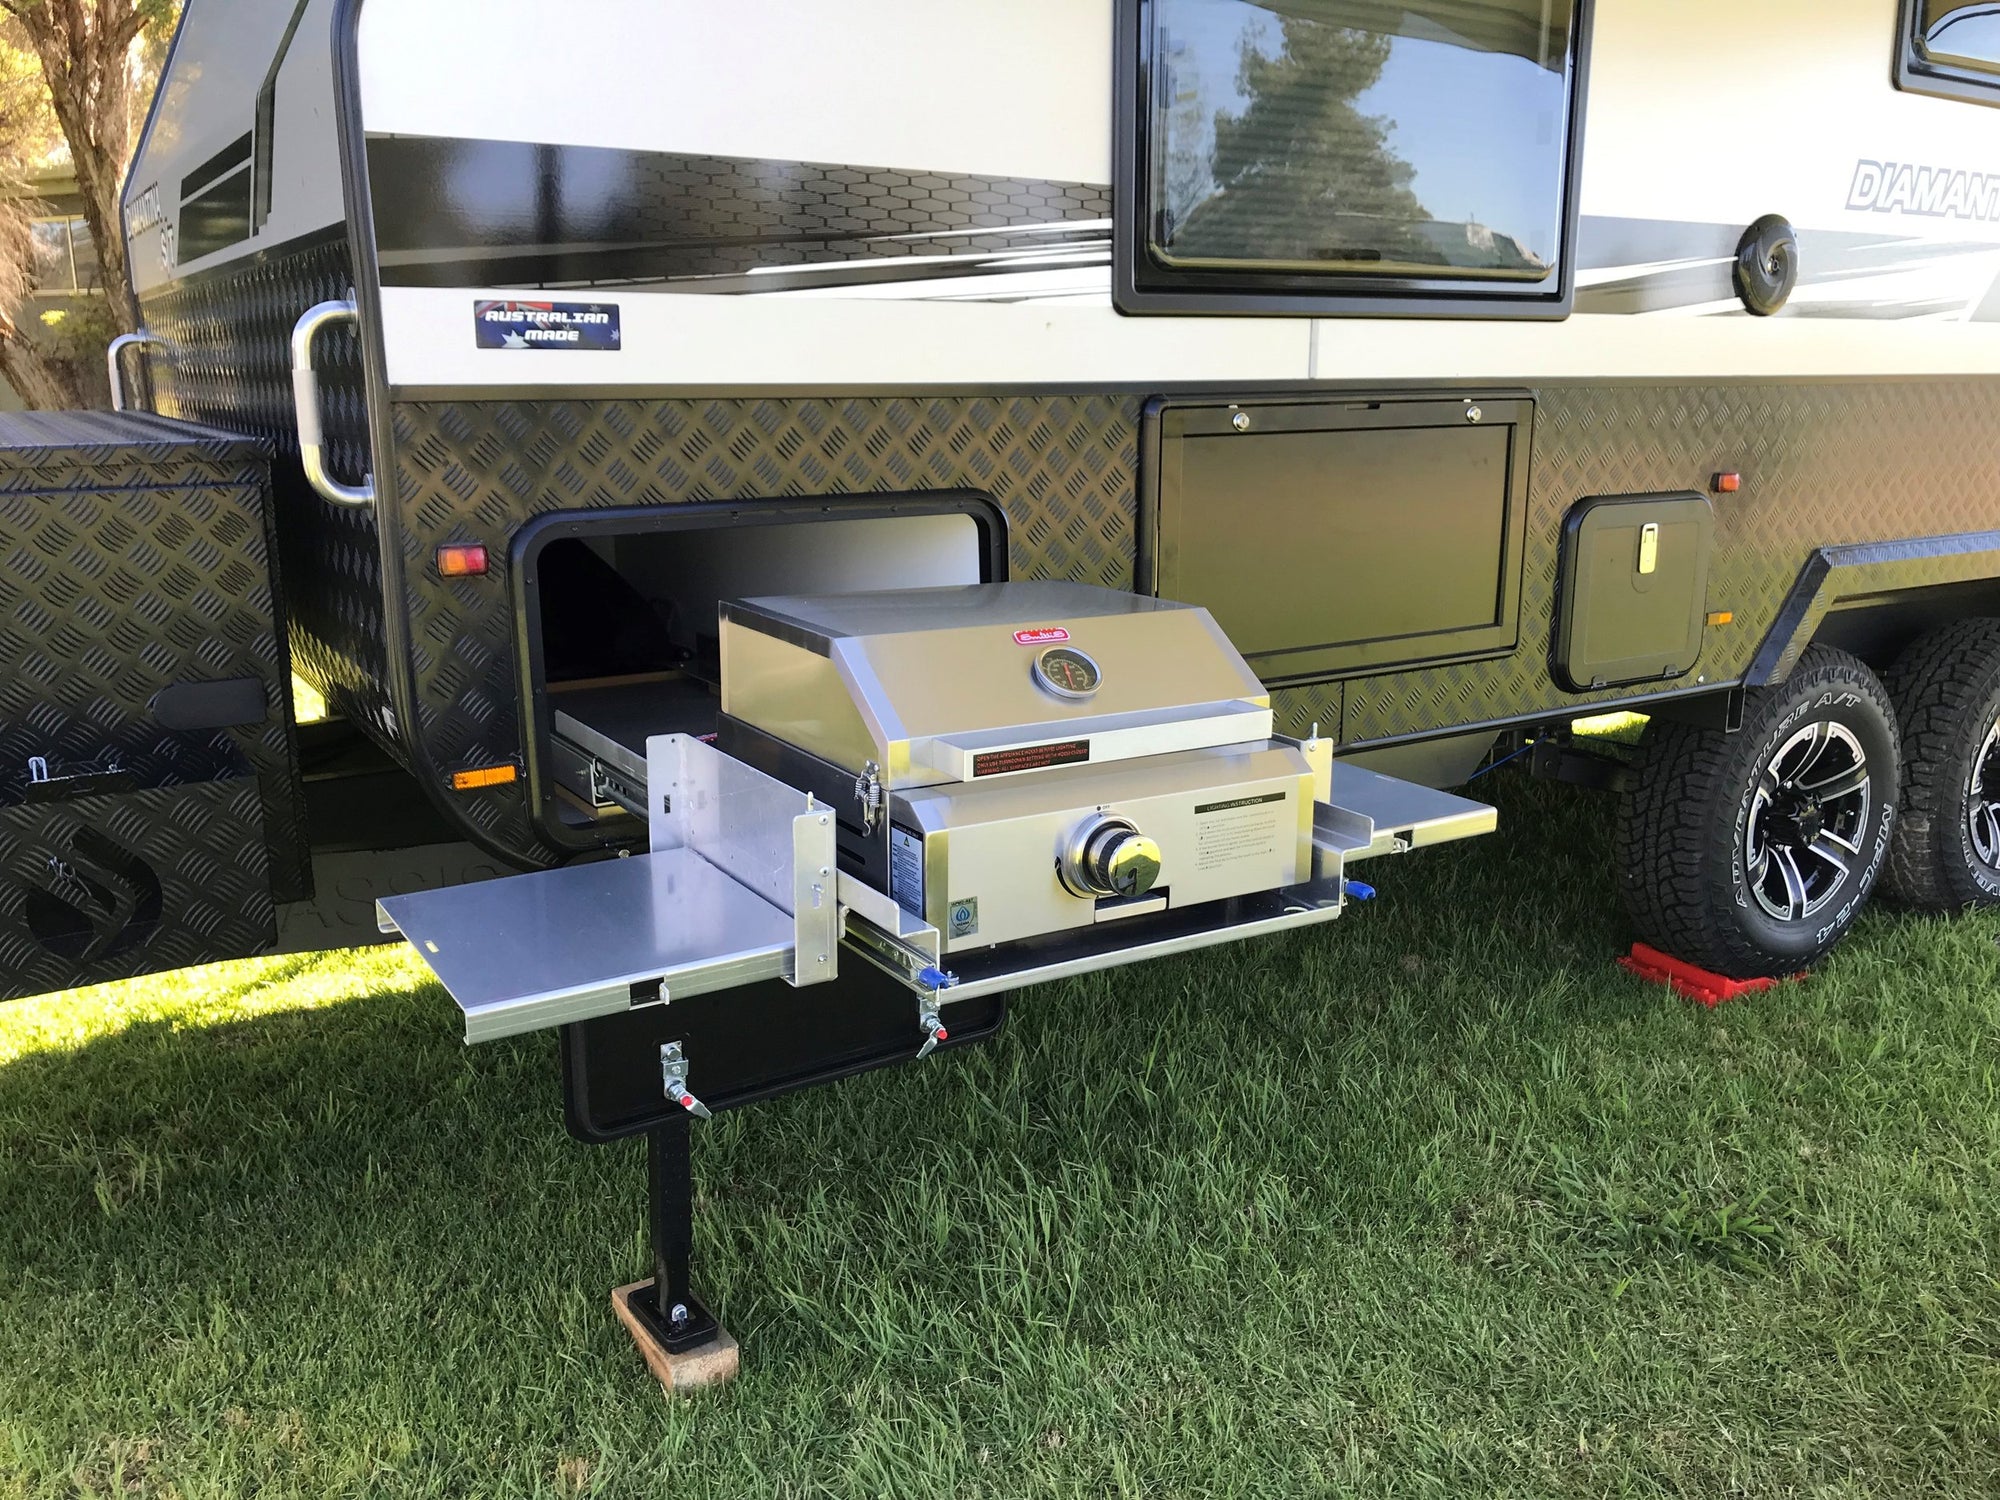 BBQ Cooking with your caravan